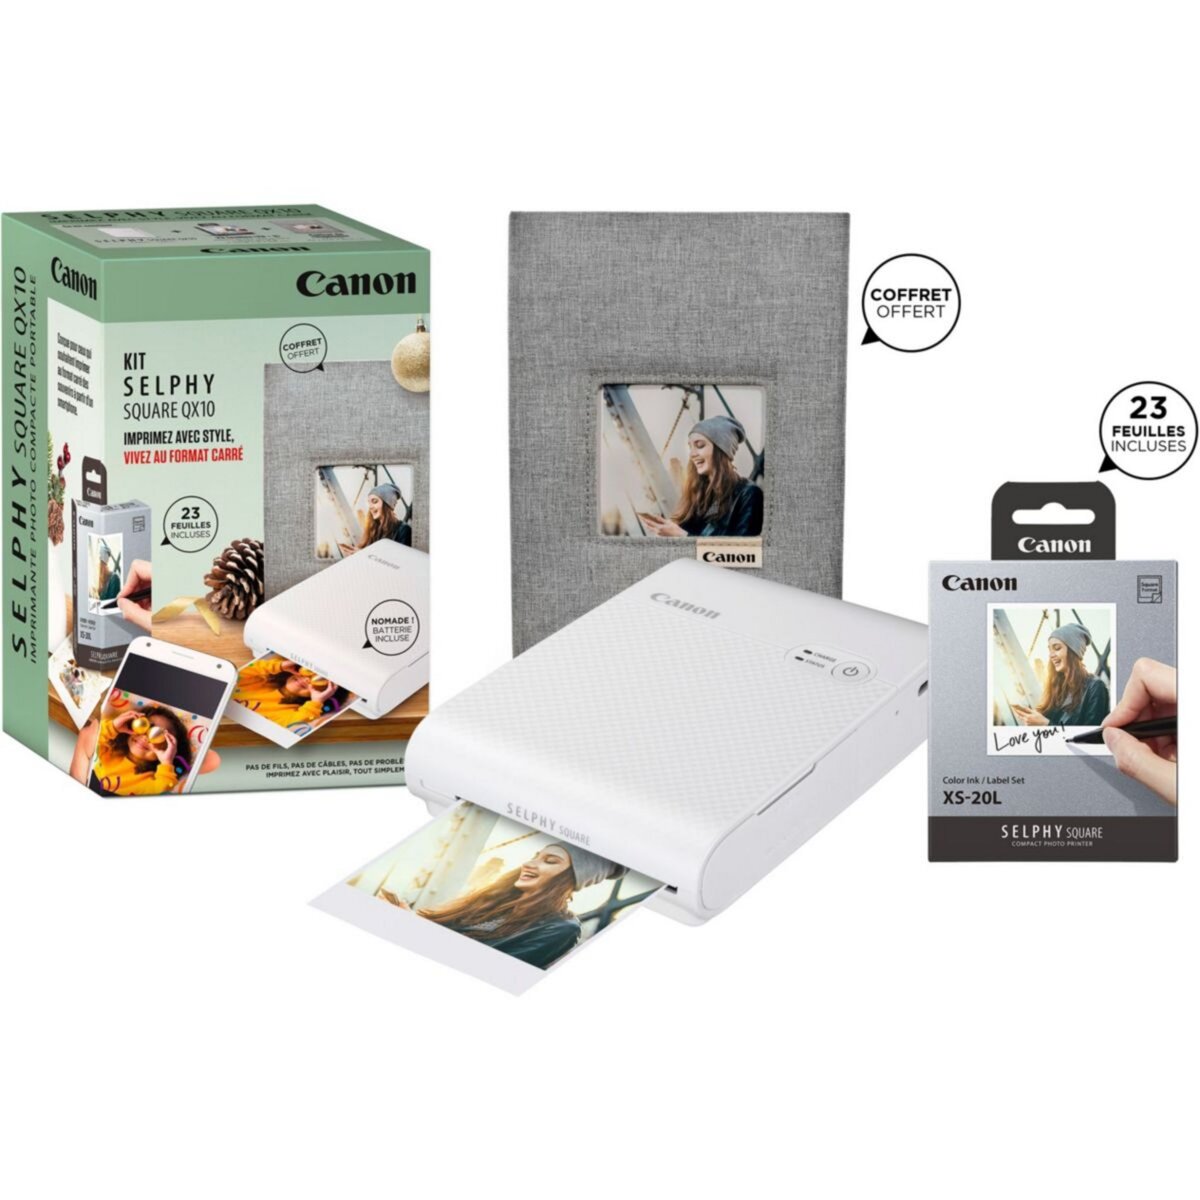 Imprimante photo portable kit créatif zoemini 2 blanche+40 f+acces Canon